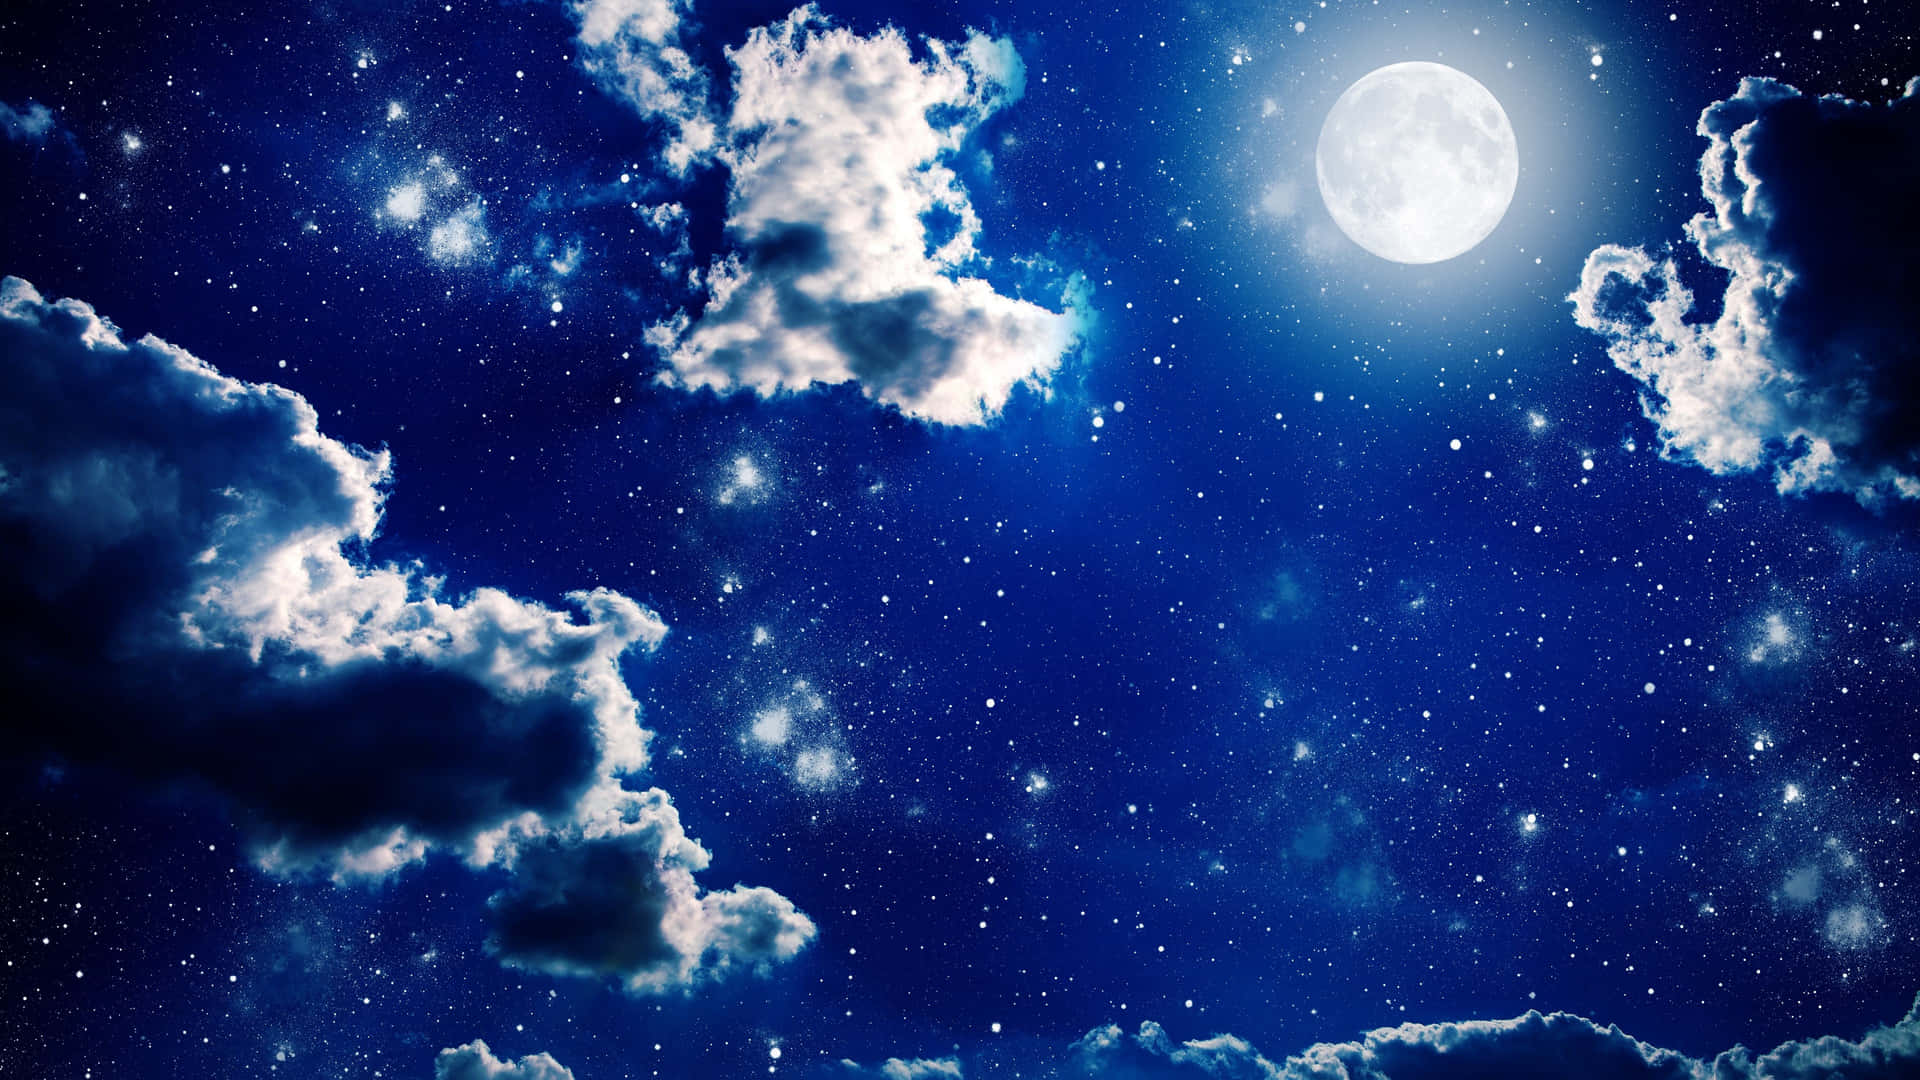 Dark Blue Starry Night Sky Moon Picture